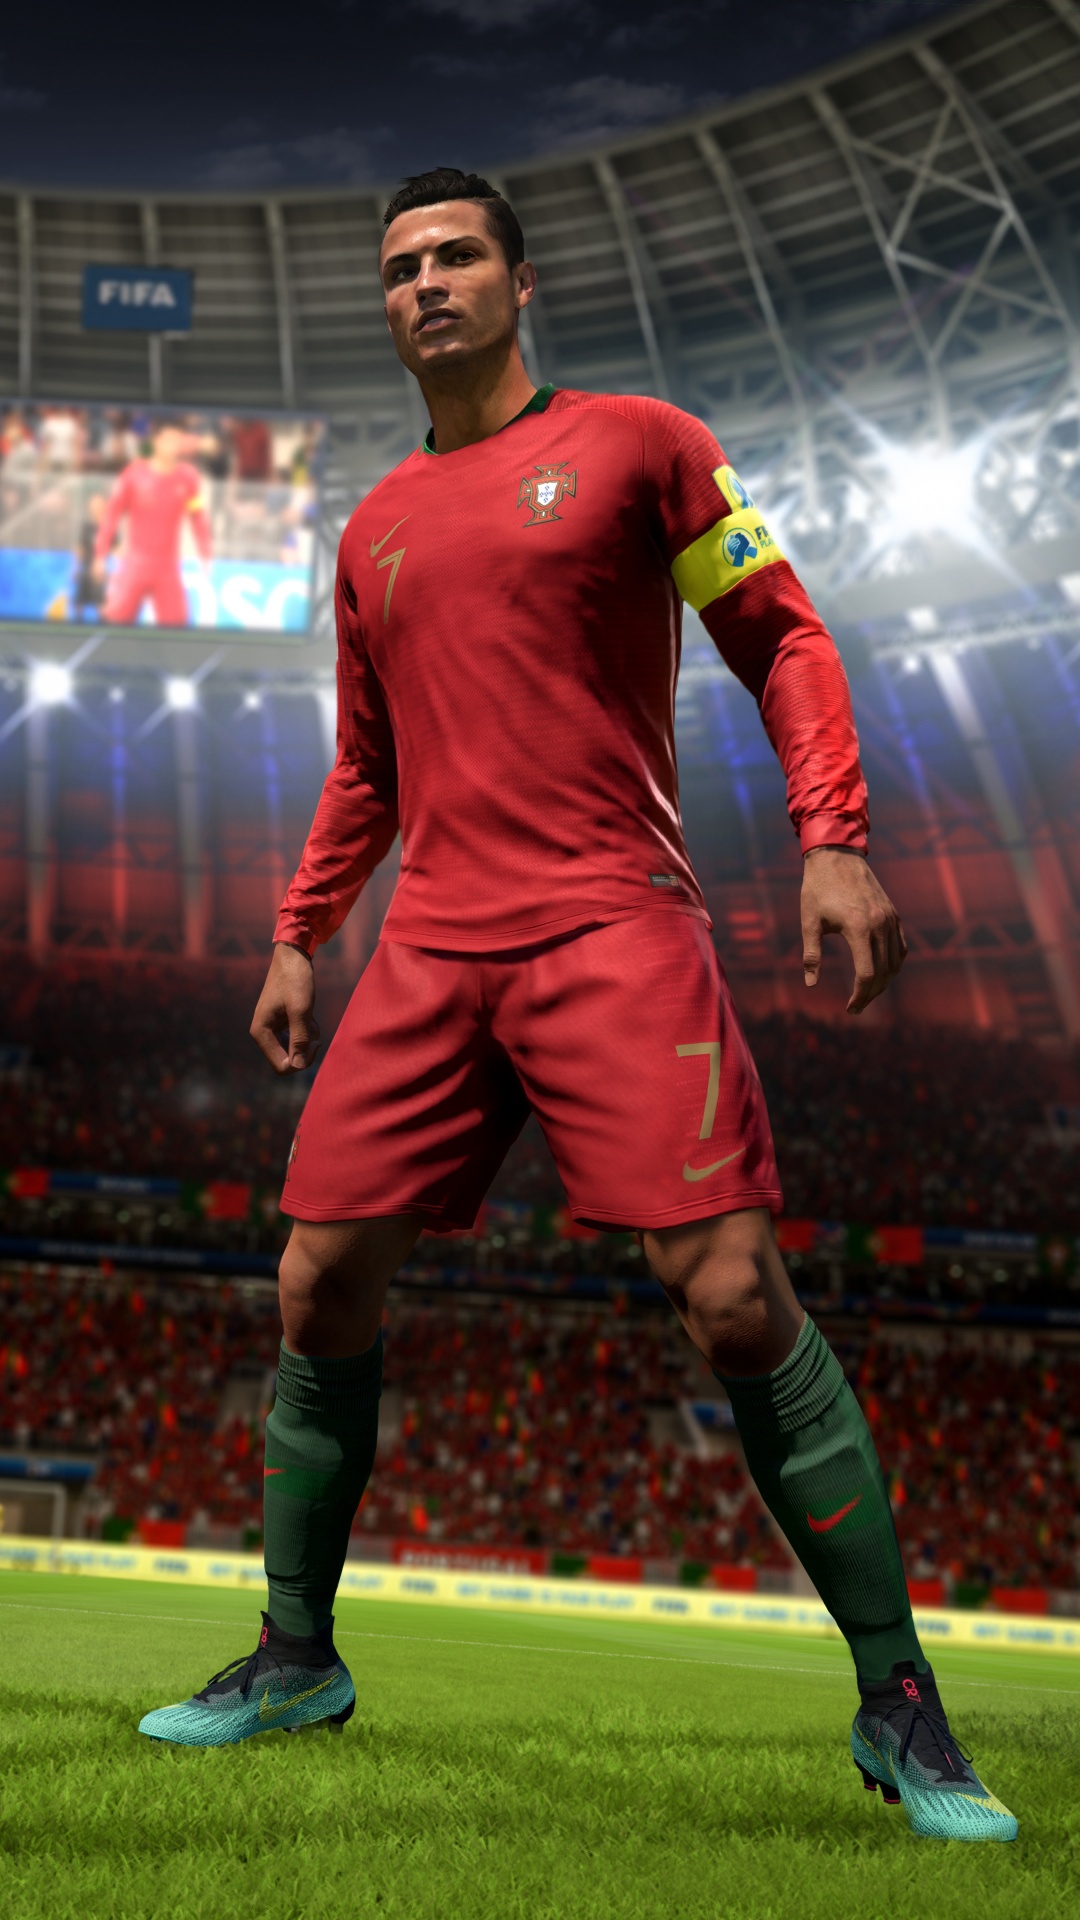 Fifa 18, La Copa Del Mundo de 2018, ea Sports, Electronic Arts, Playstation 4. Wallpaper in 1080x1920 Resolution